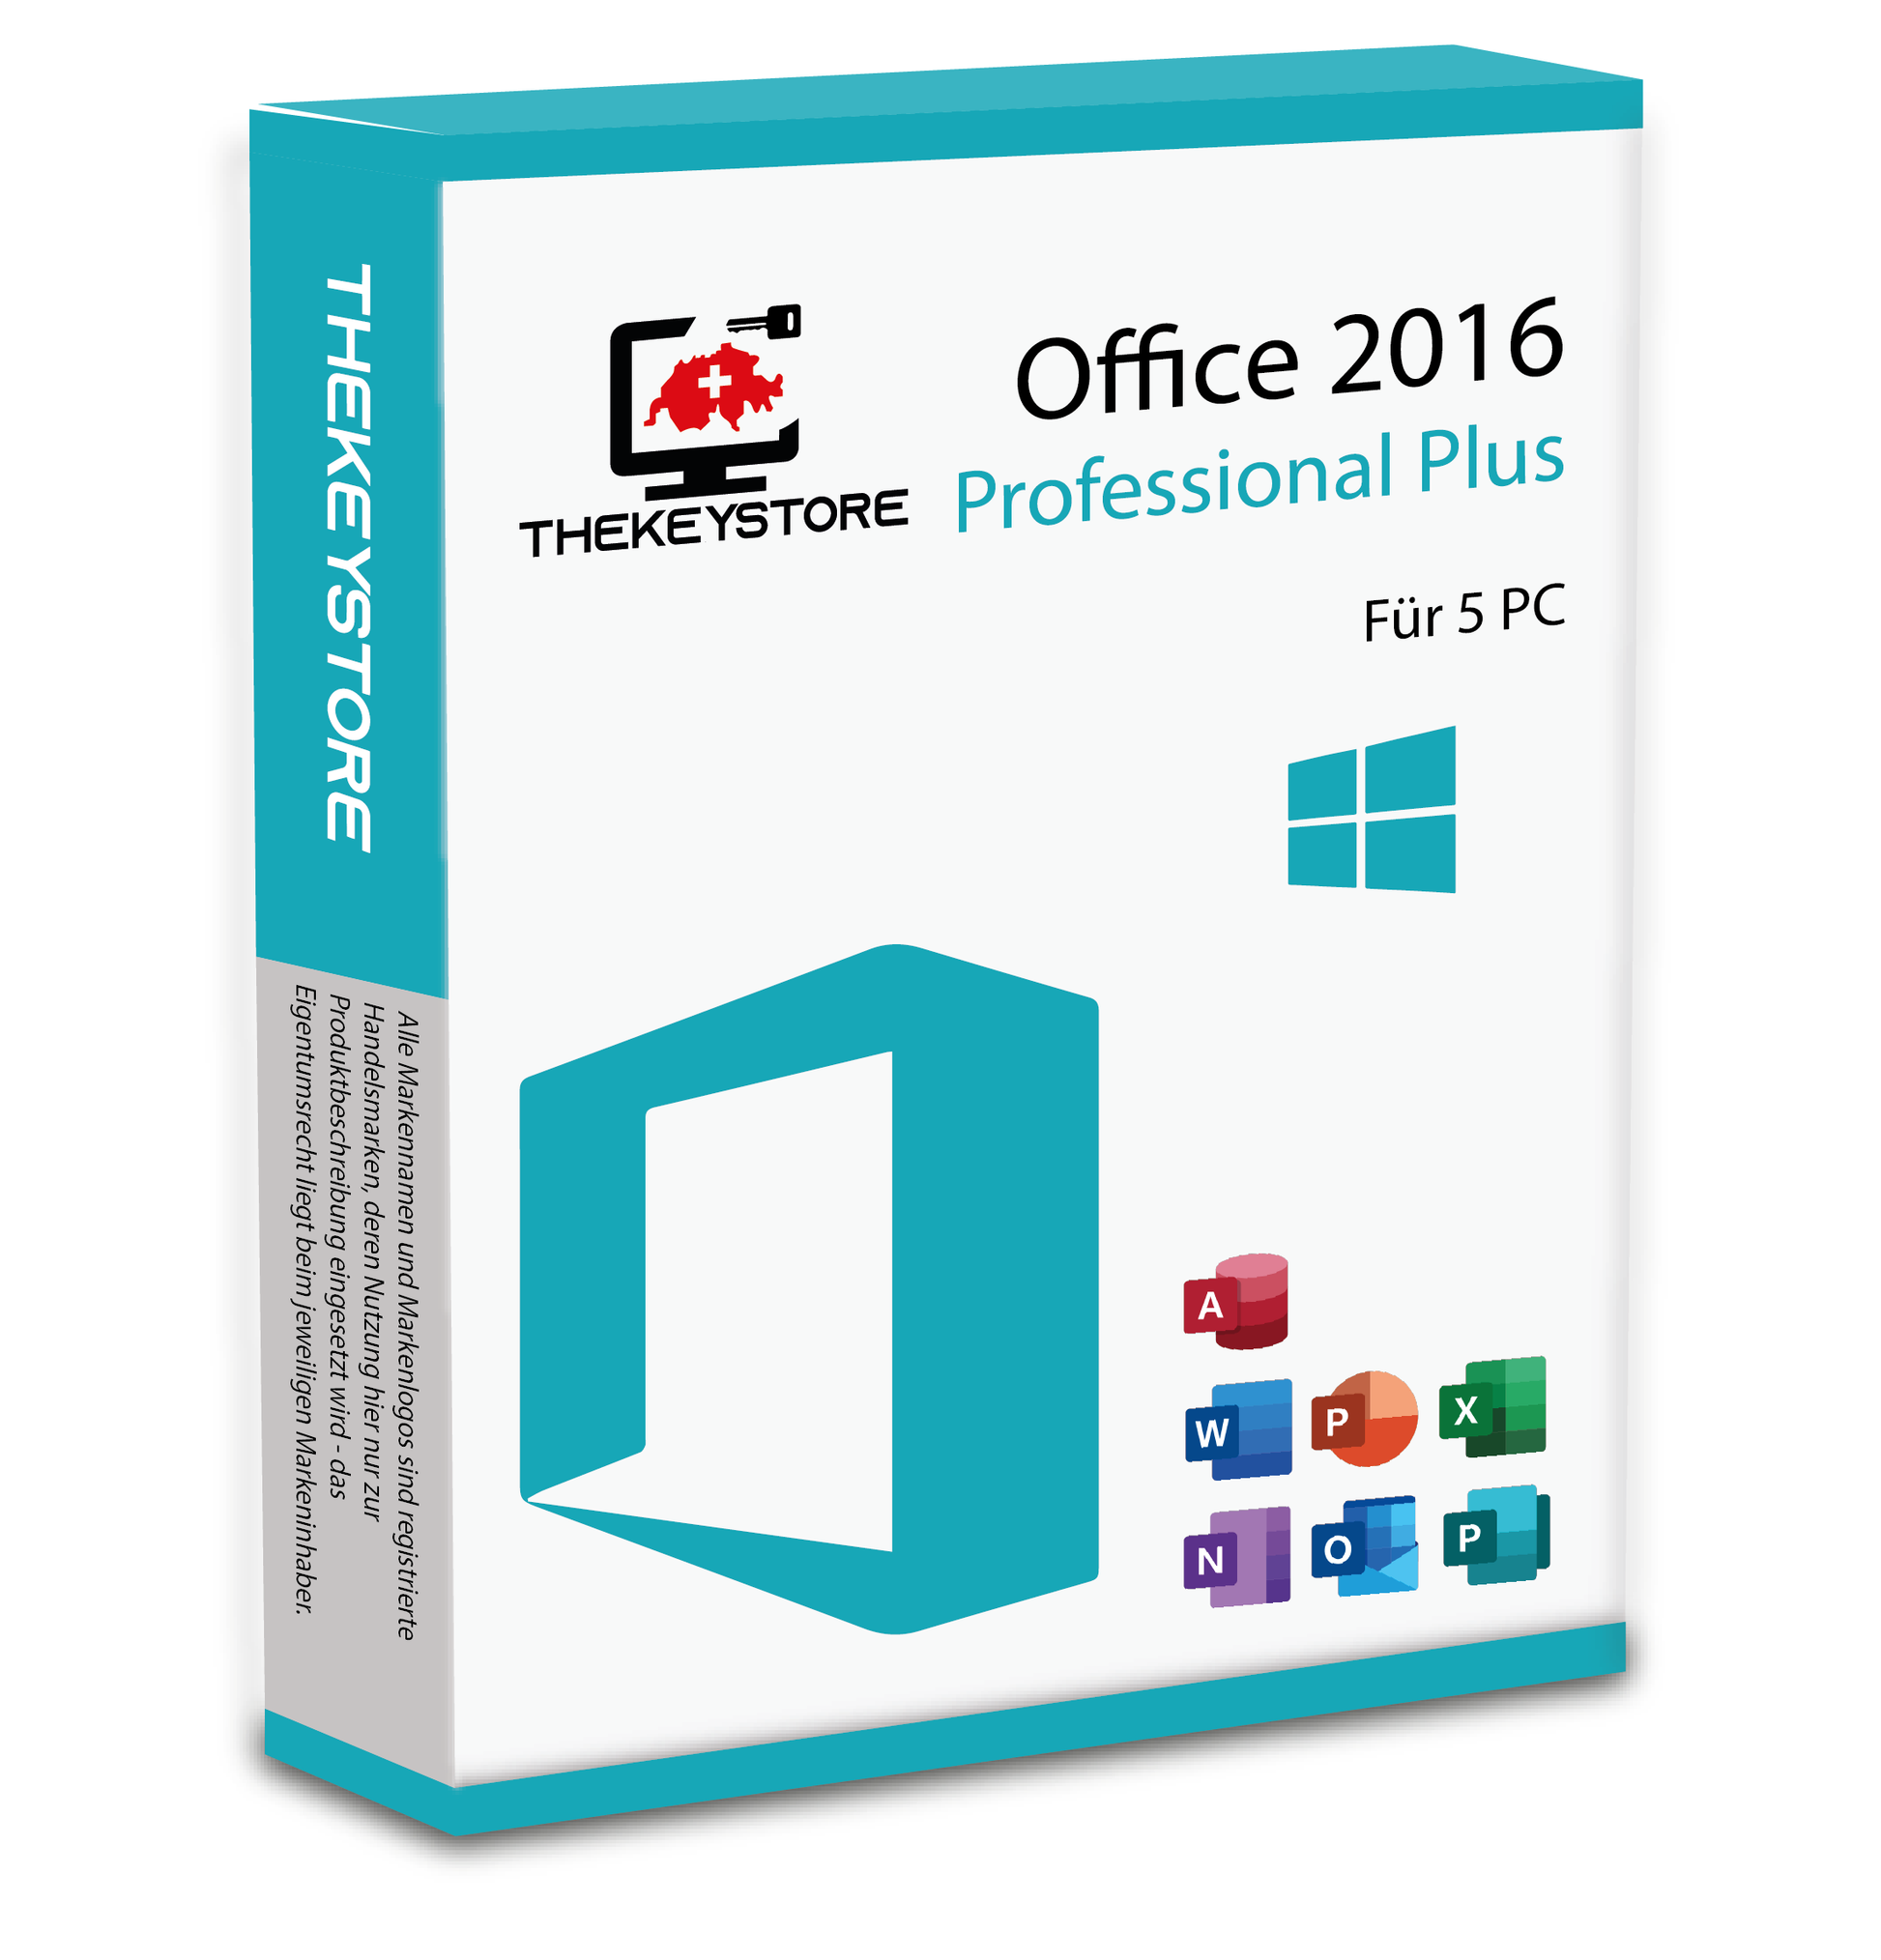 Microsoft Office 2016 Professional Plus - Für 5 PC - TheKeyStore Schweiz